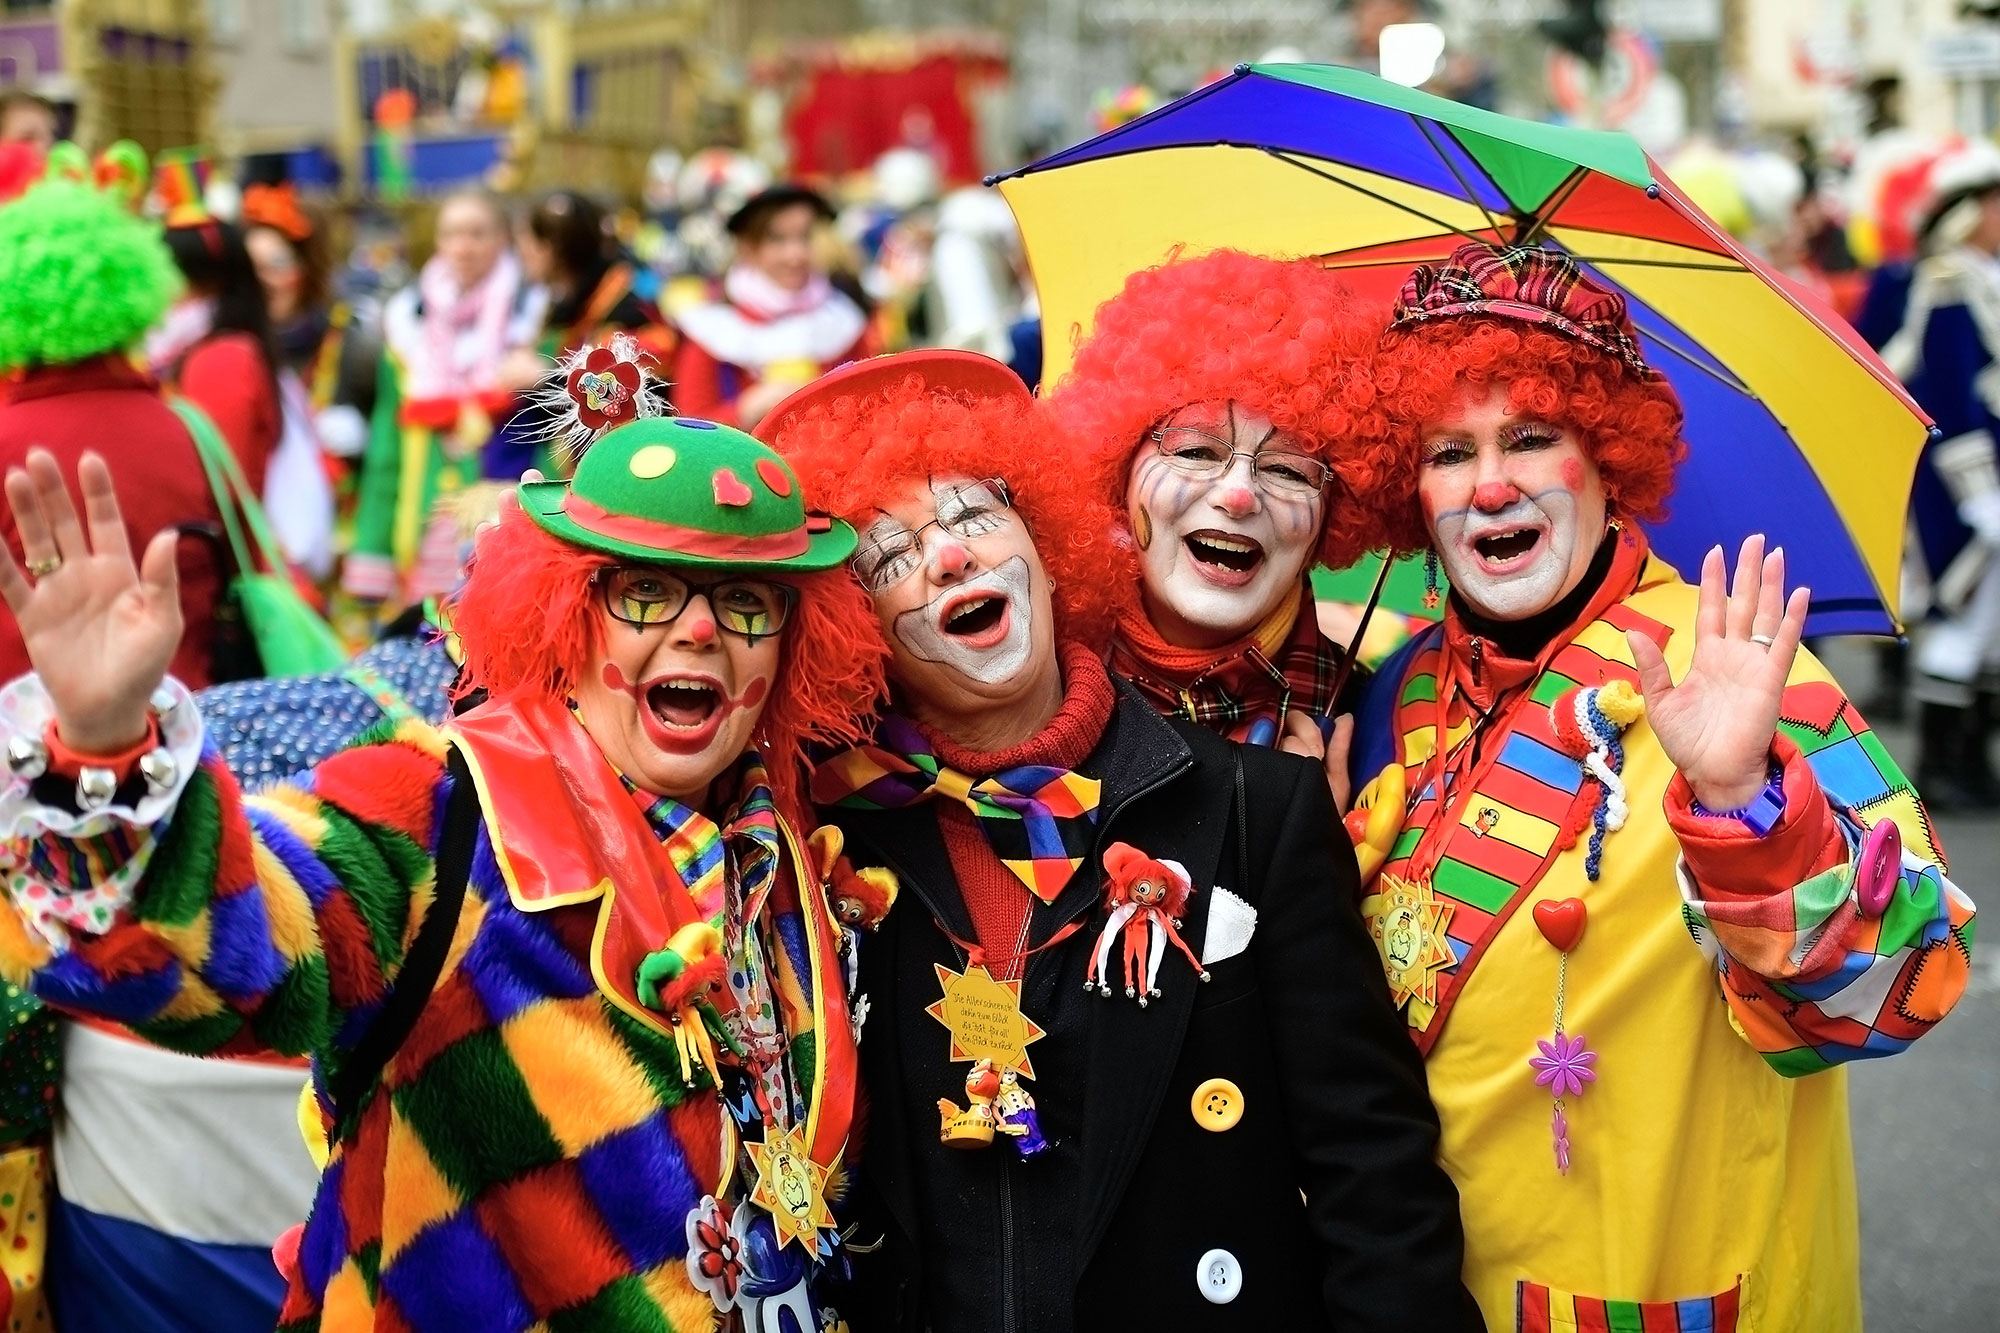 https://www.deutschland.de/sites/default/files/media/image/Strassenkarneval-Clowns.jpg